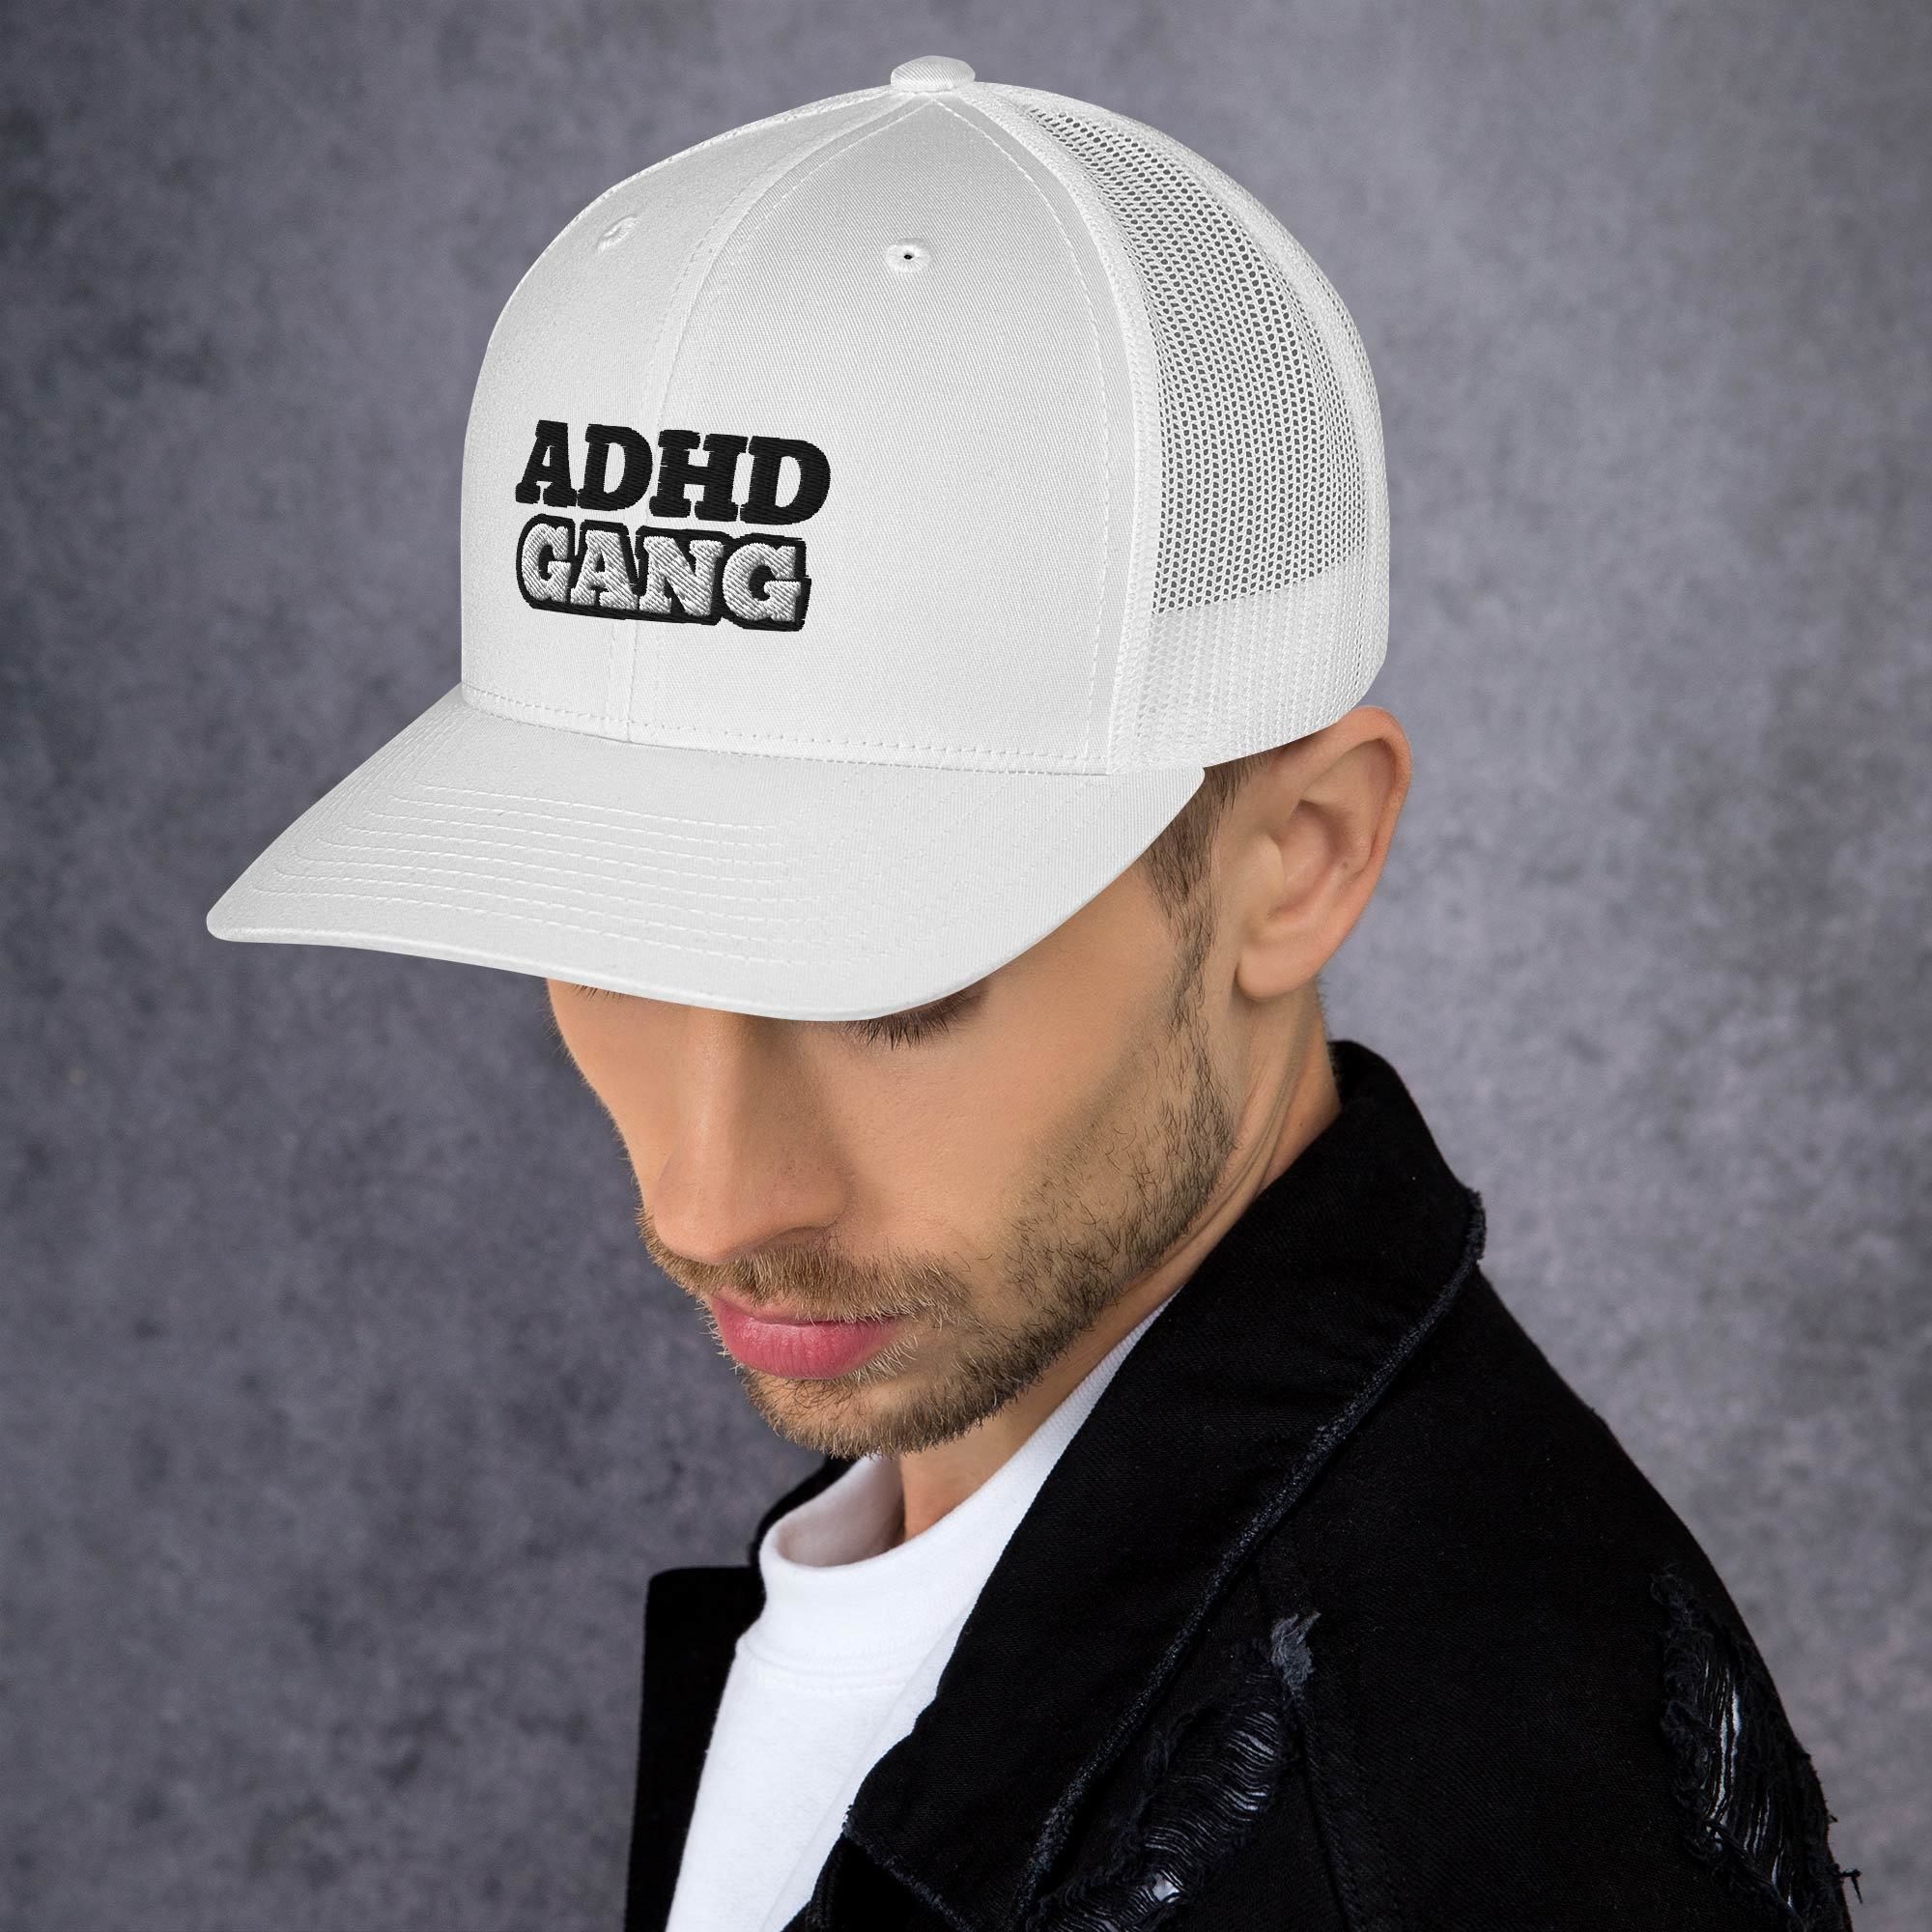 ADHD Gang Trucker Cap